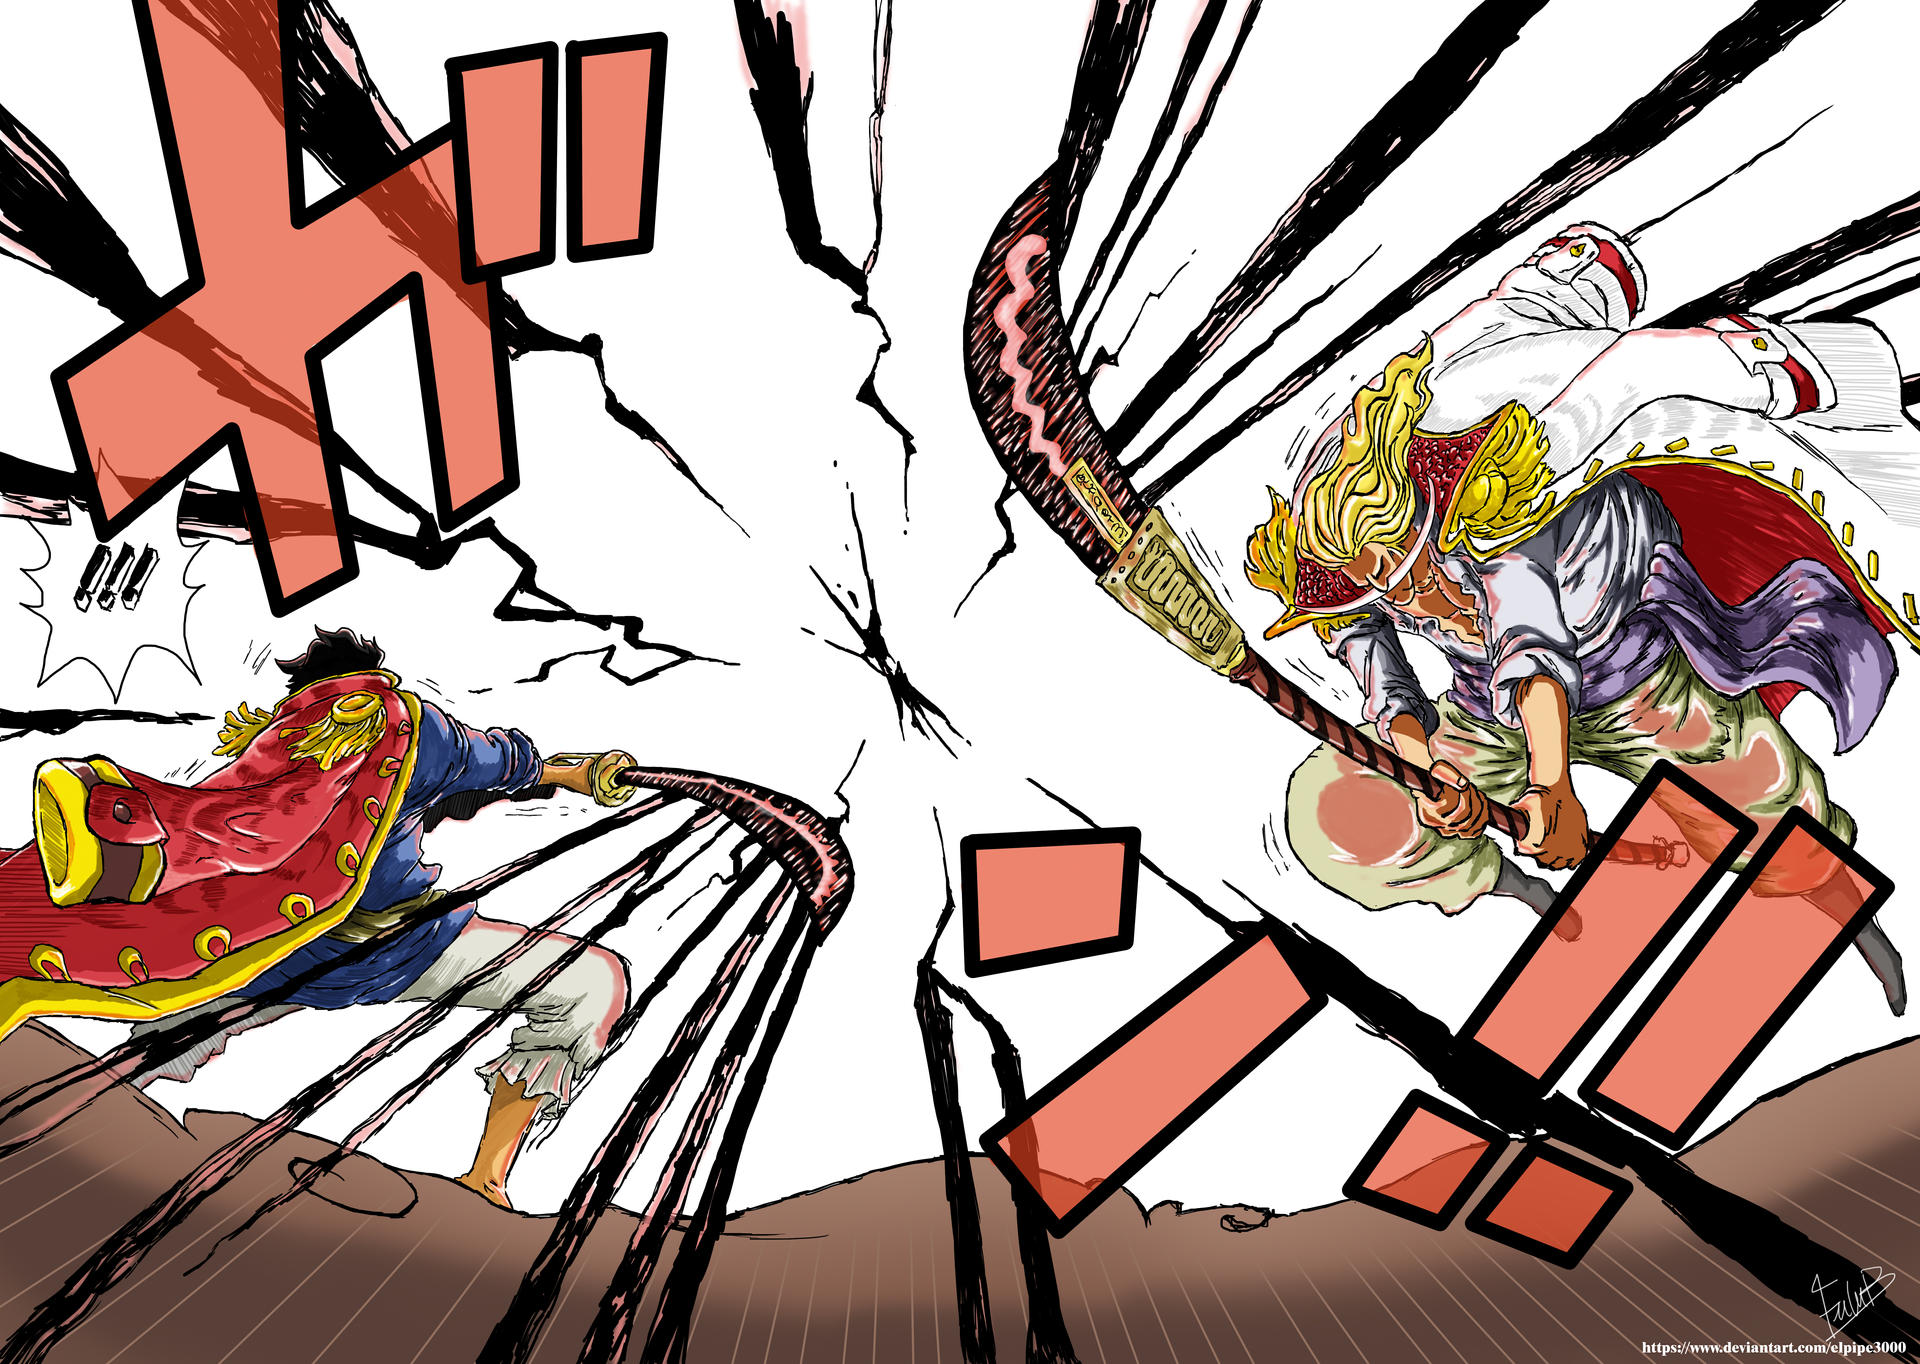 One Piece Chapter 966 Gol d Roger vs Oden Kozuki by Amanomoon on DeviantArt